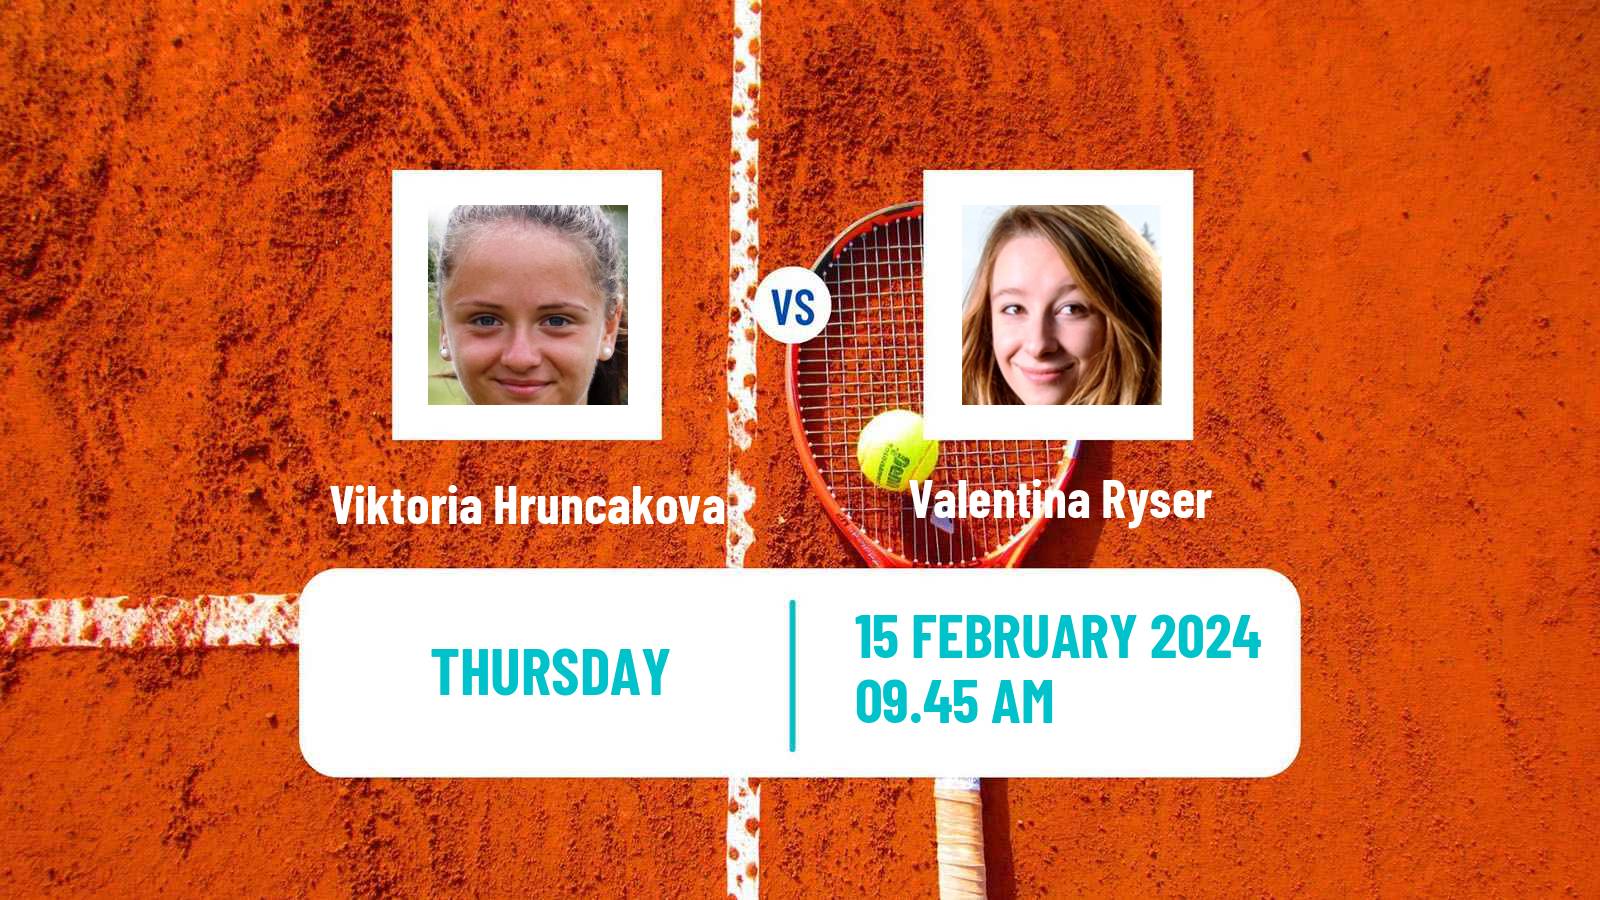 Tennis ITF W50 Roehampton Women Viktoria Hruncakova - Valentina Ryser